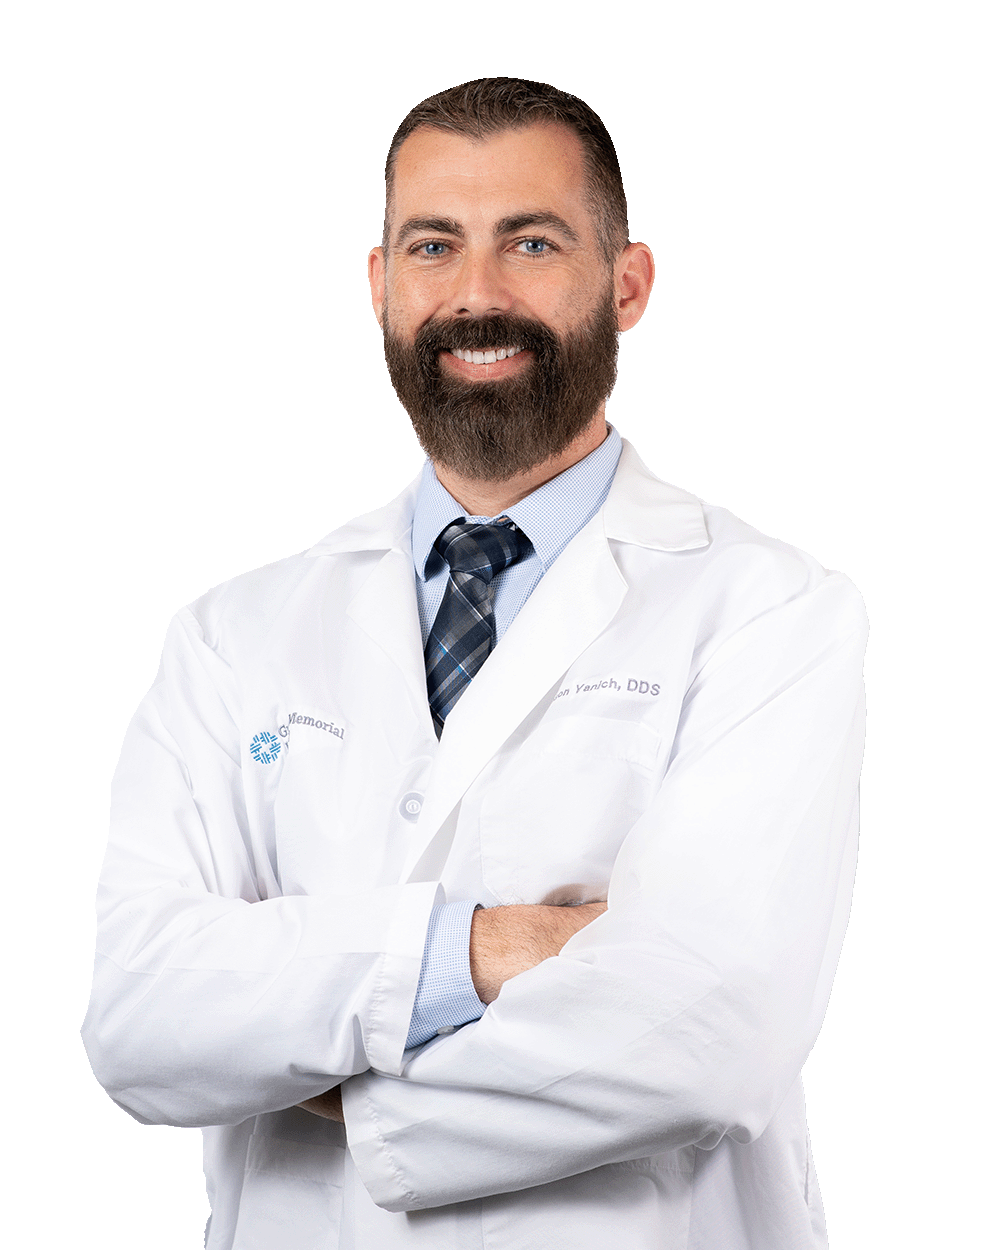 Dr. Yanich